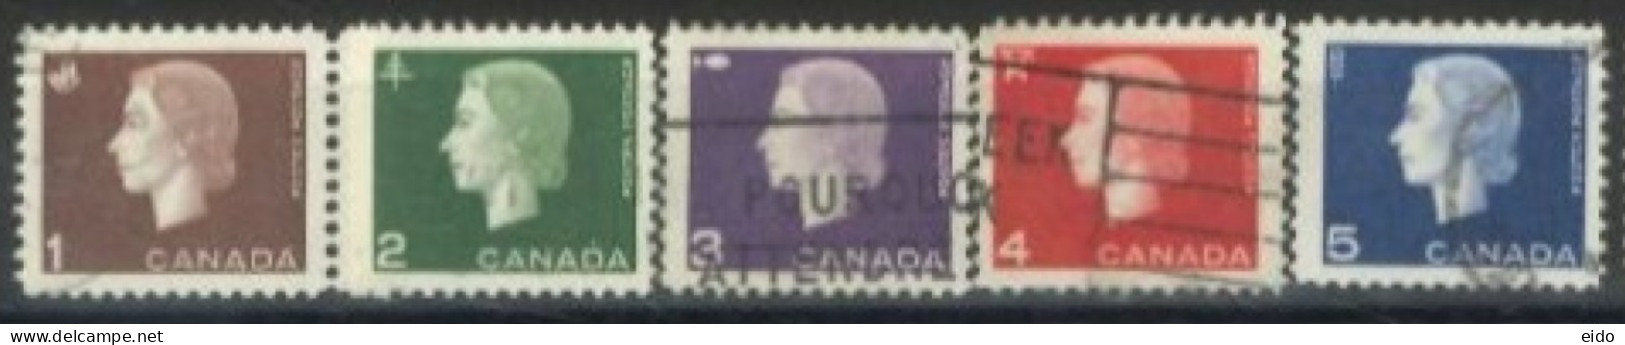 CANADA - 1962, QUEEN ELIZABETH II STAMPS & DIFFERENT SYMBOLS COMPLETE SET OF 5, USED. - Oblitérés